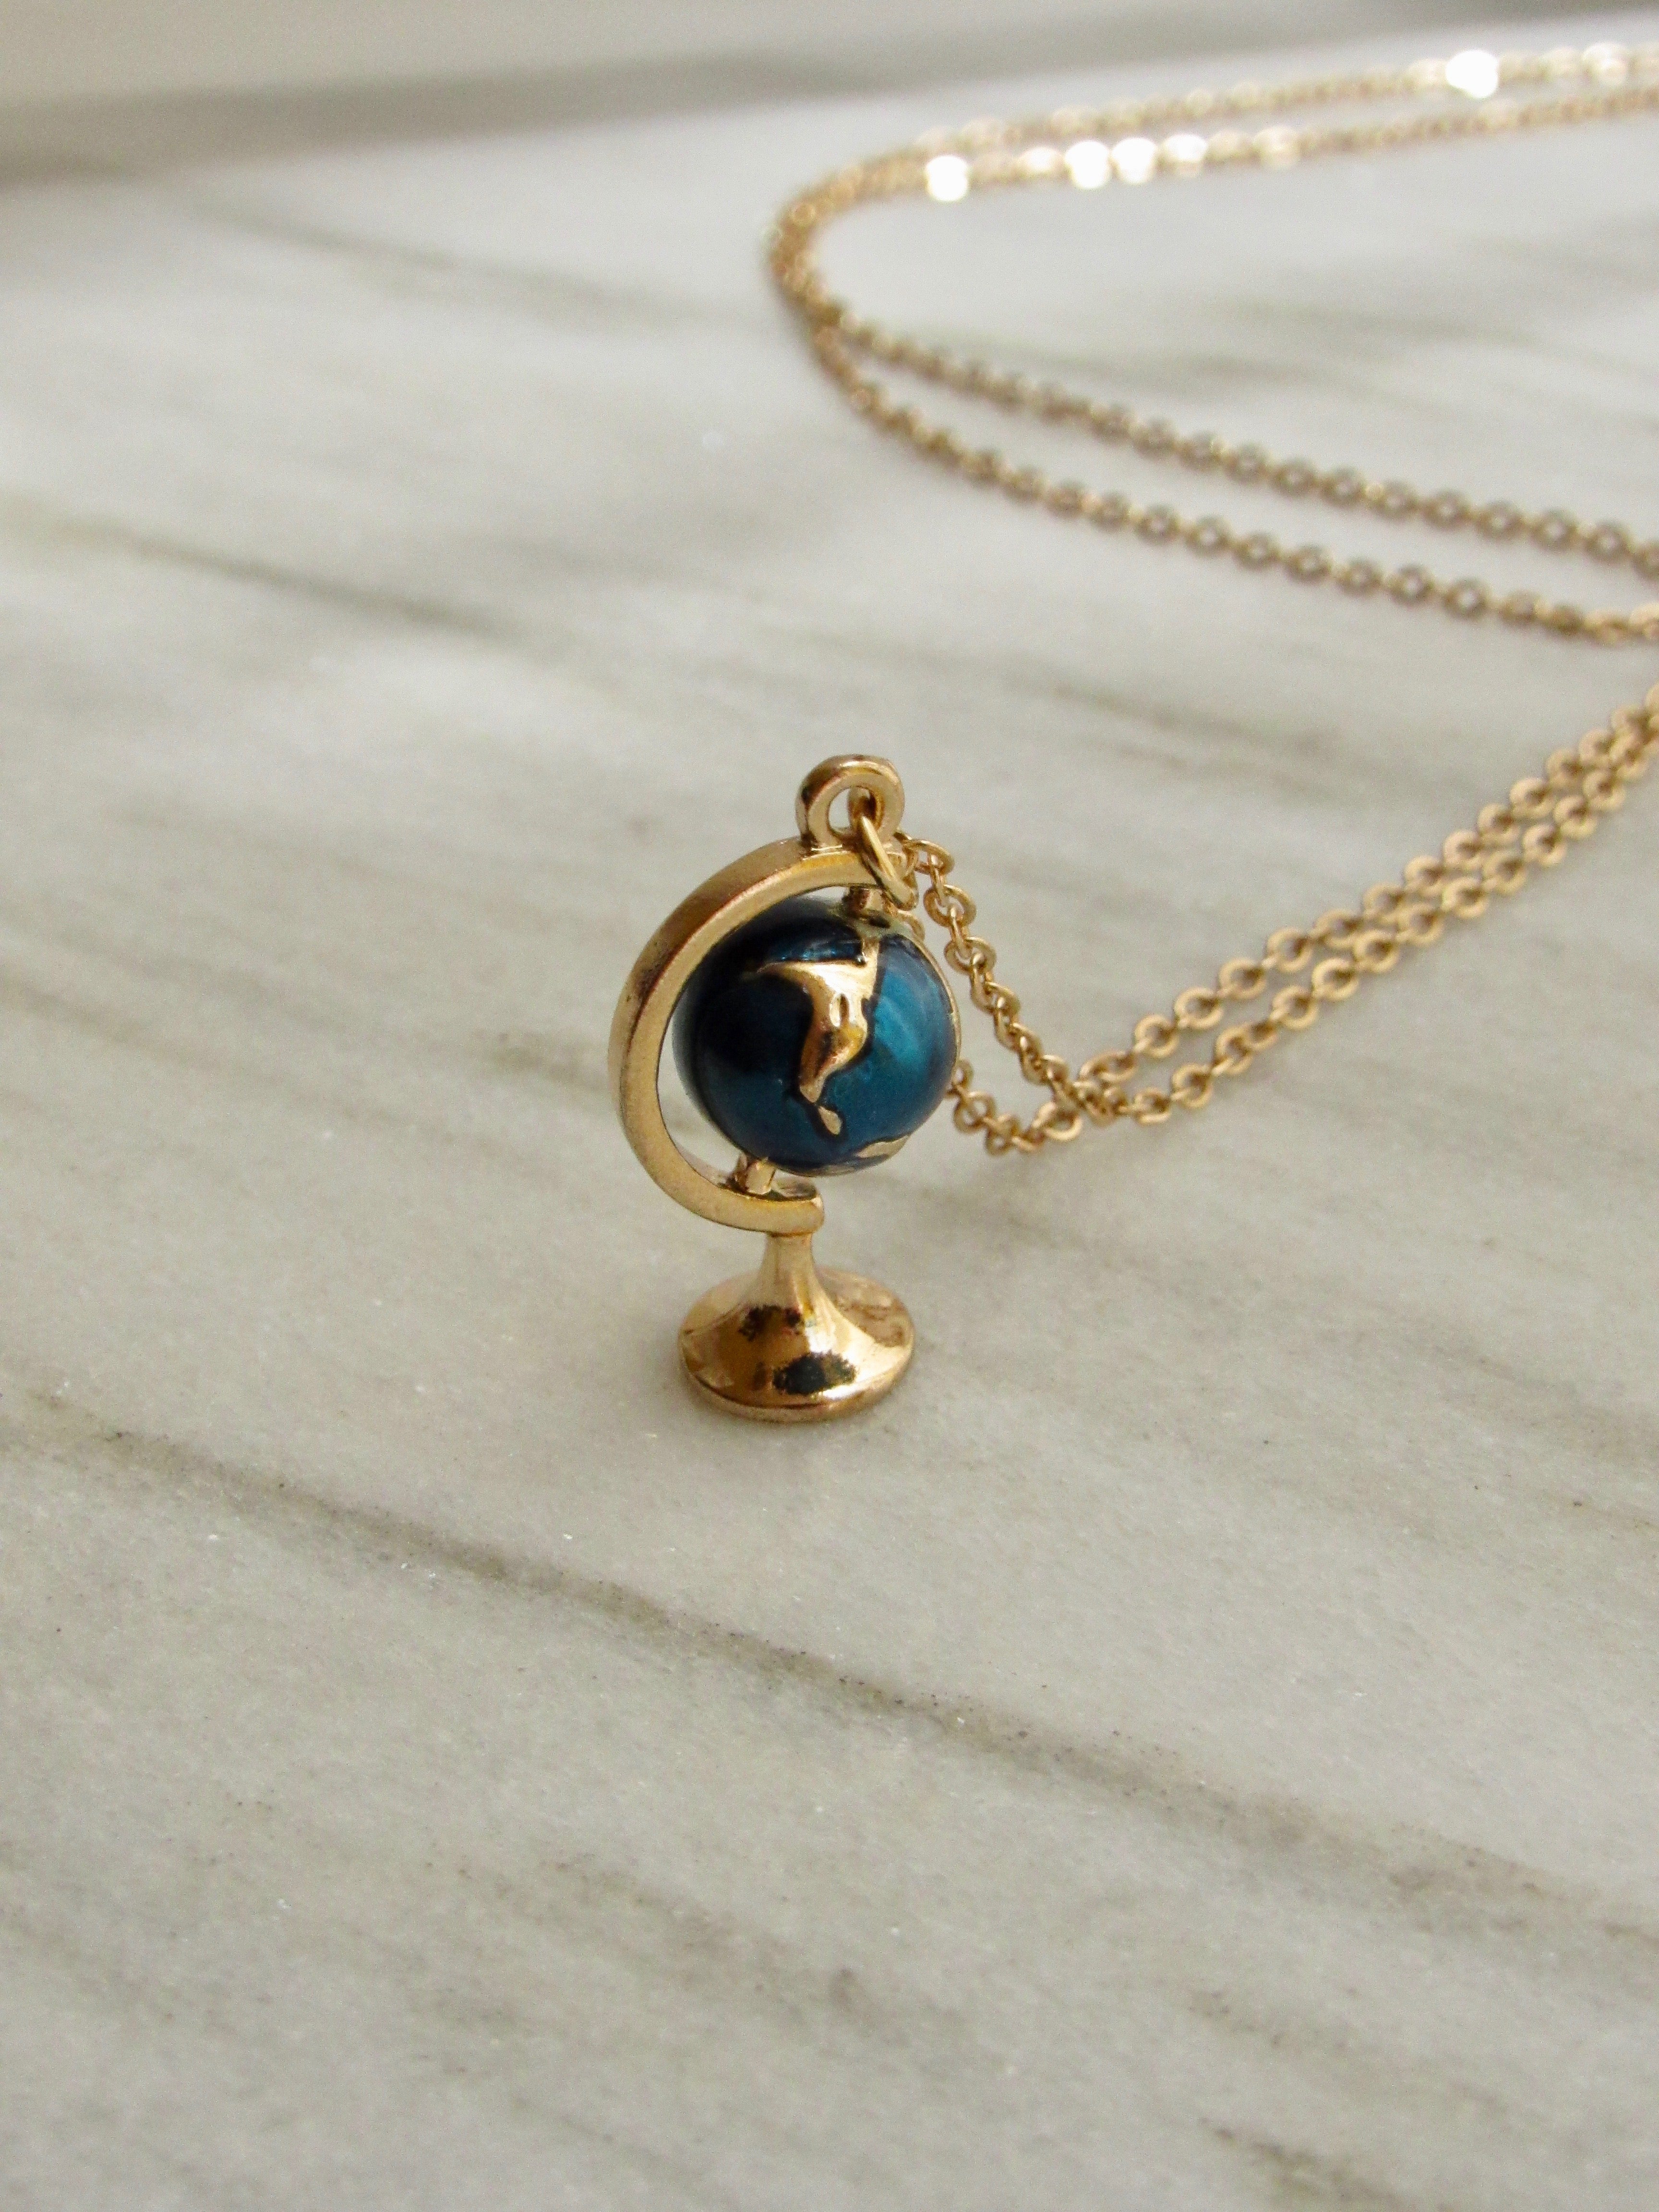 Terrestrial Globe Pendant Necklace in Gold